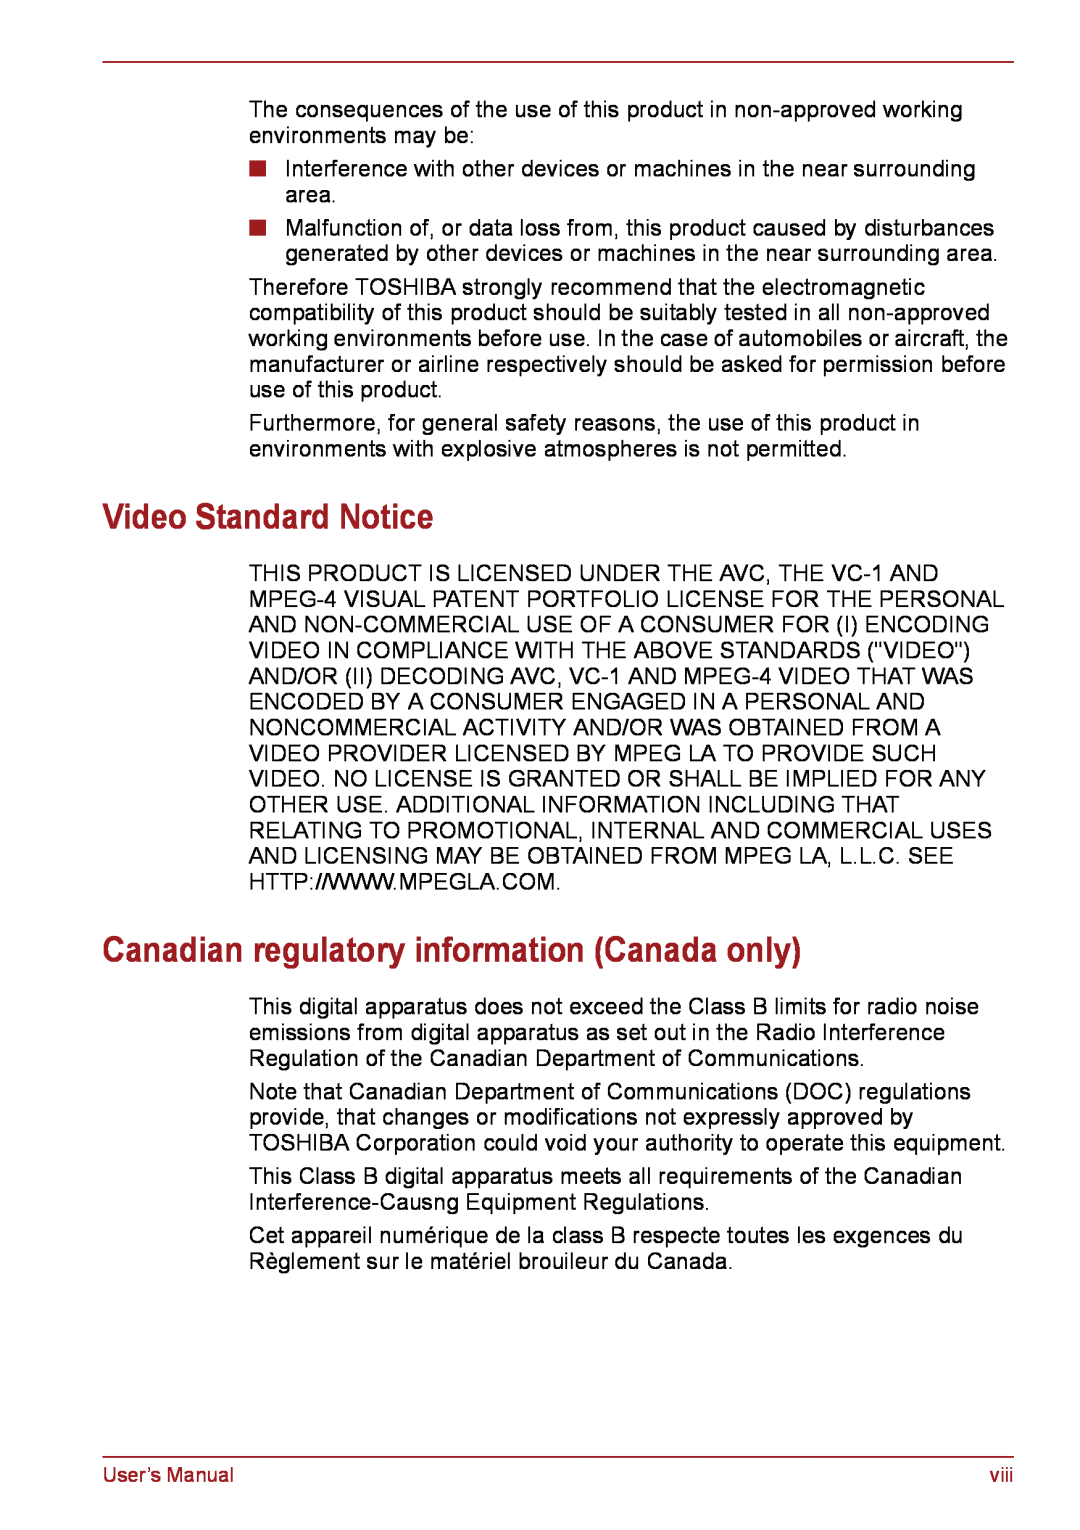 Toshiba PSC08U-02D01D user manual Video Standard Notice, Canadian regulatory information Canada only 